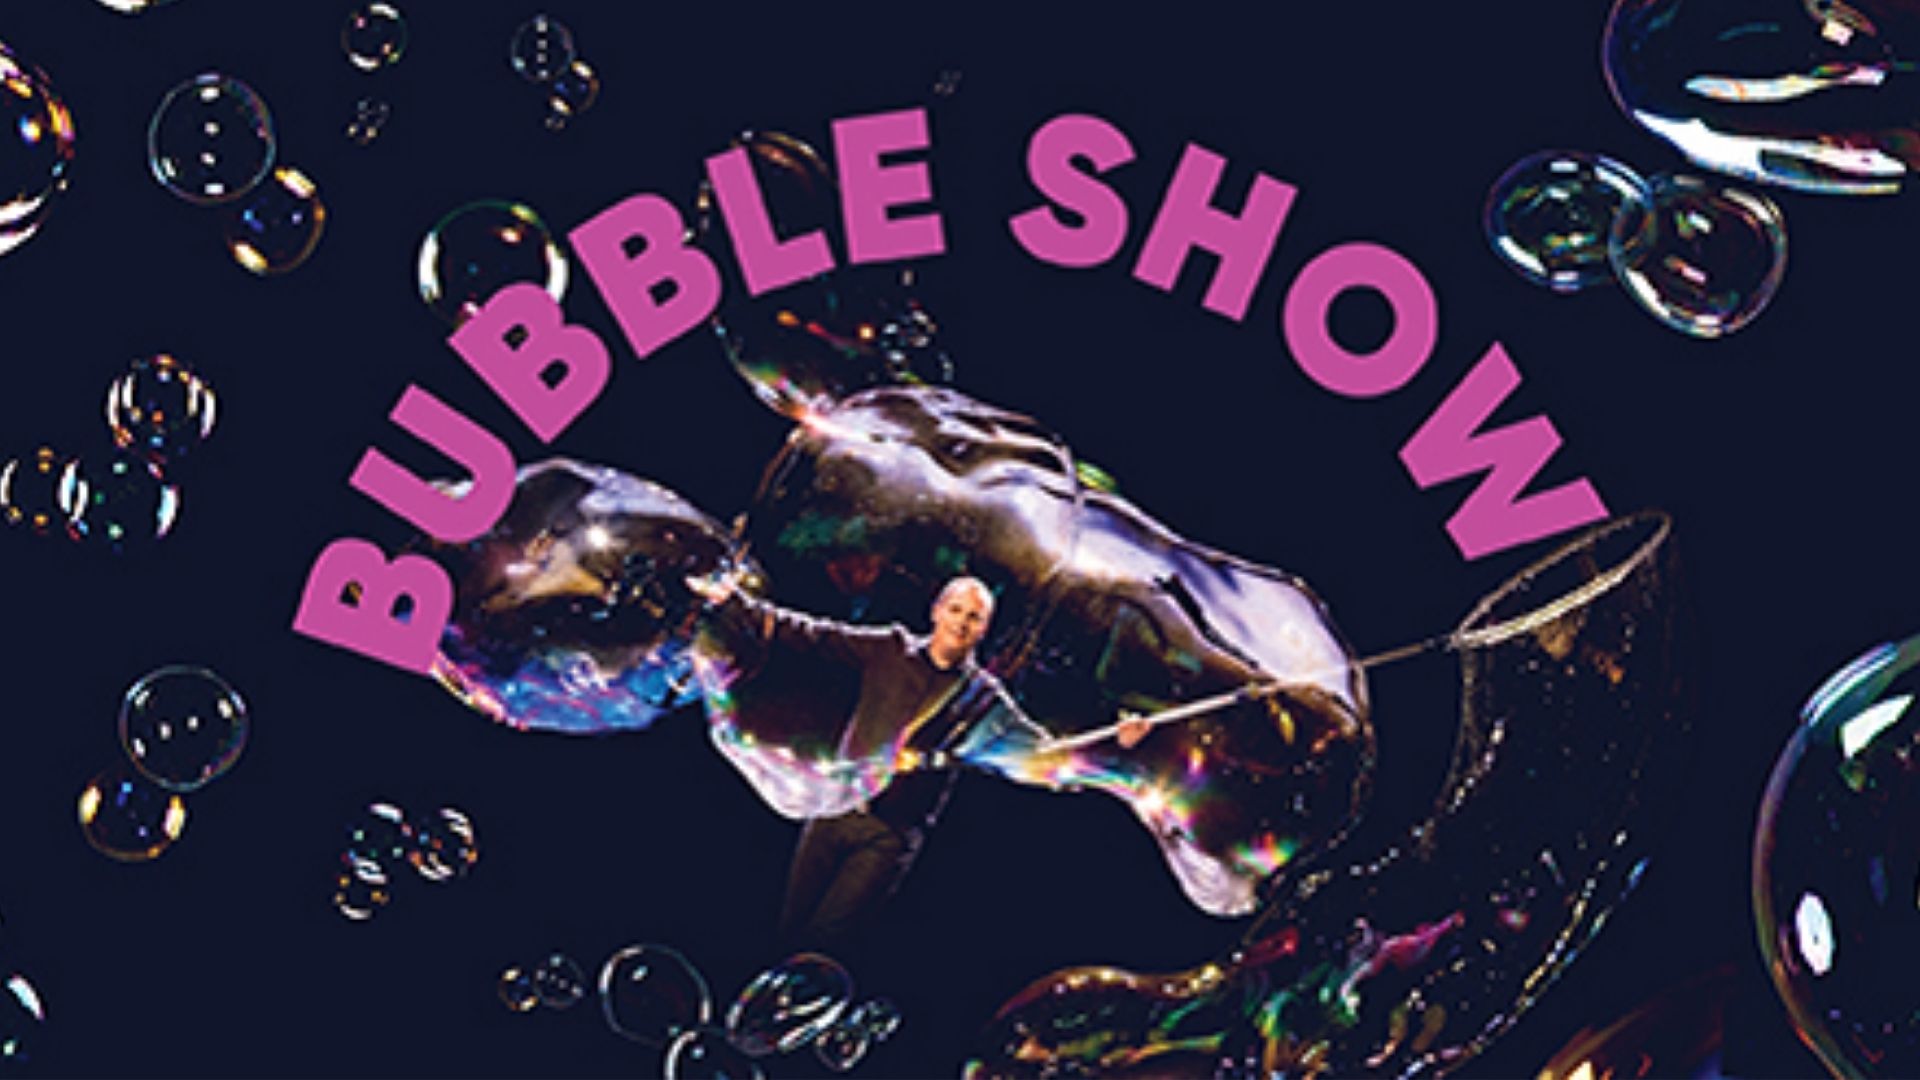 bubble show çocuk gösteri